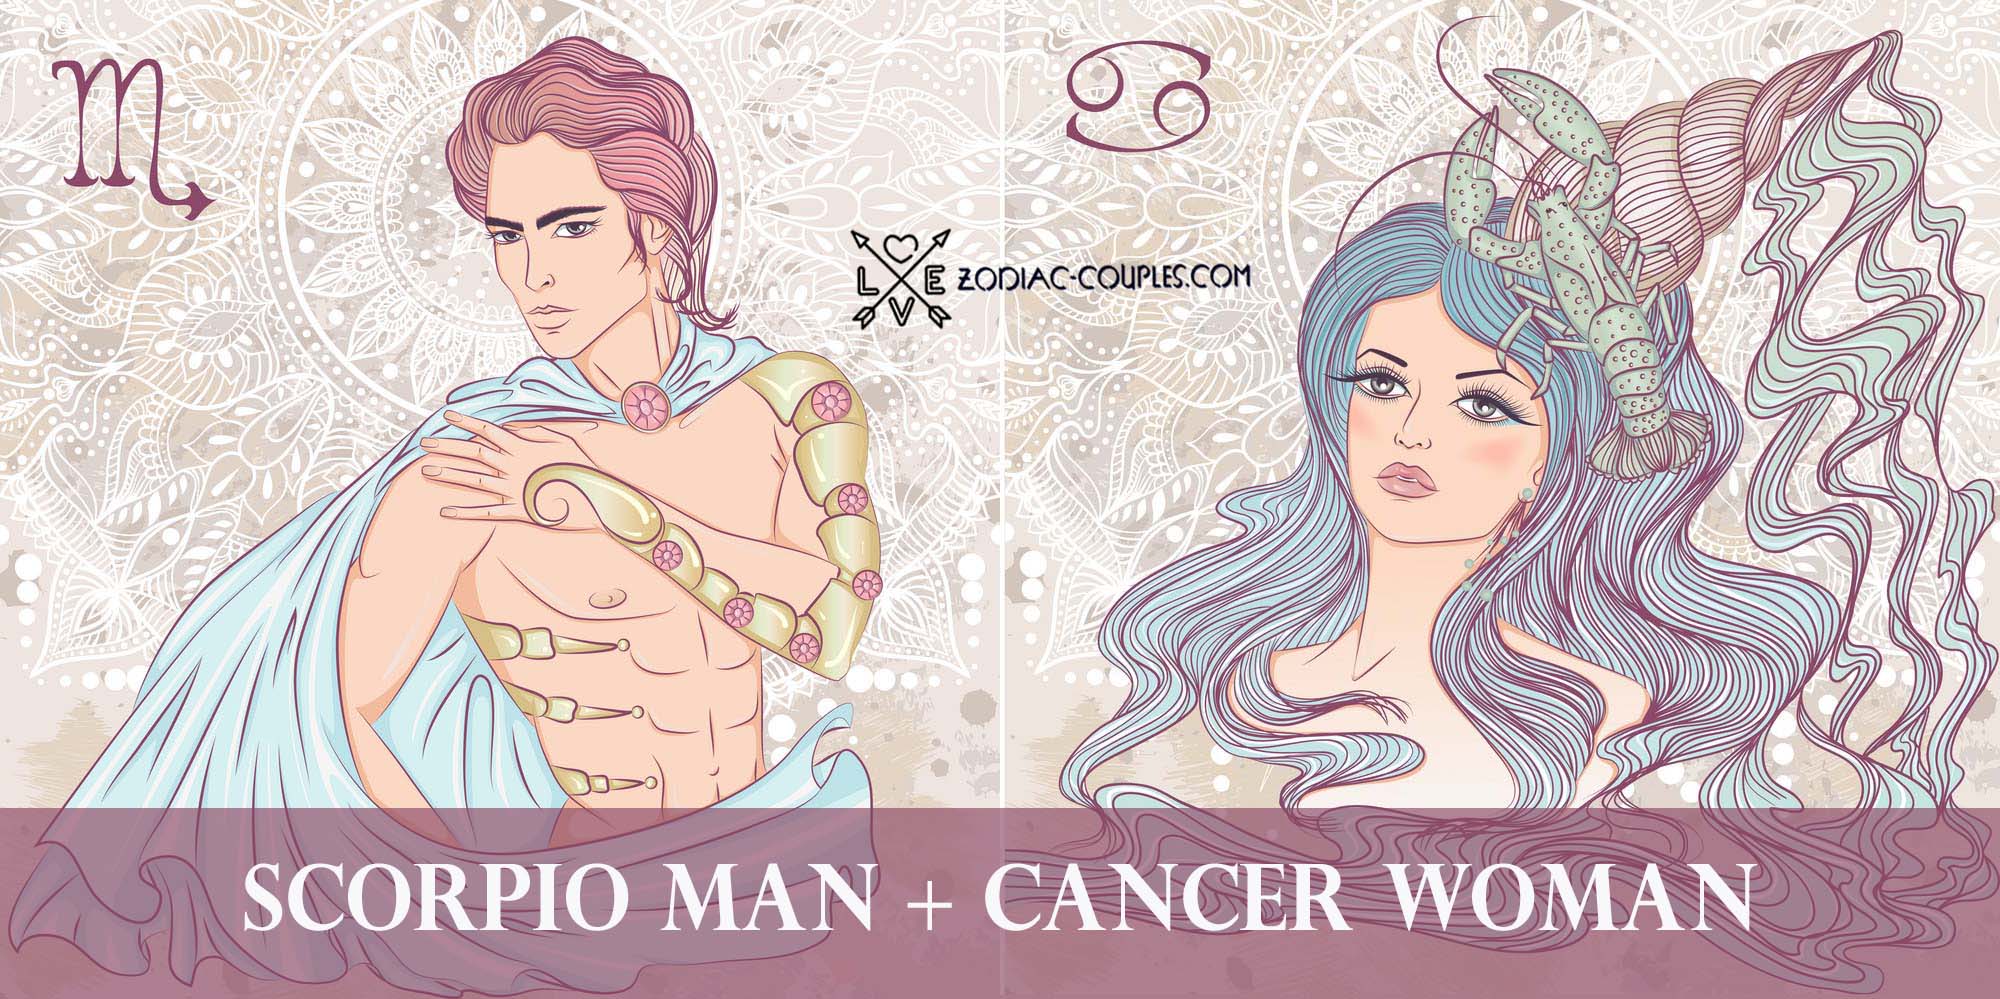 Scorpio man and cancer woman break up